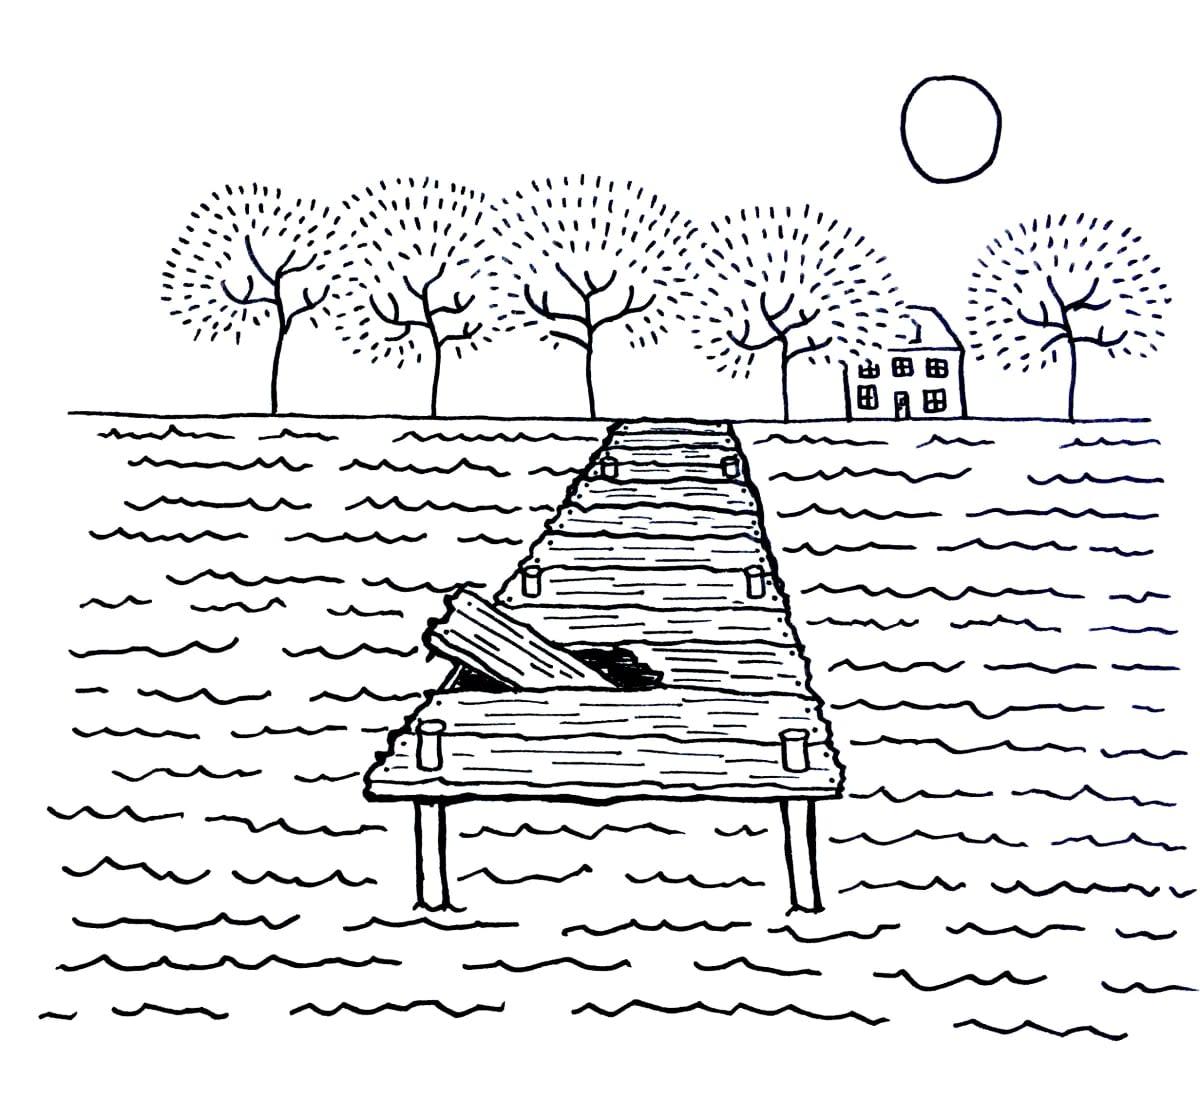 dock-illustration